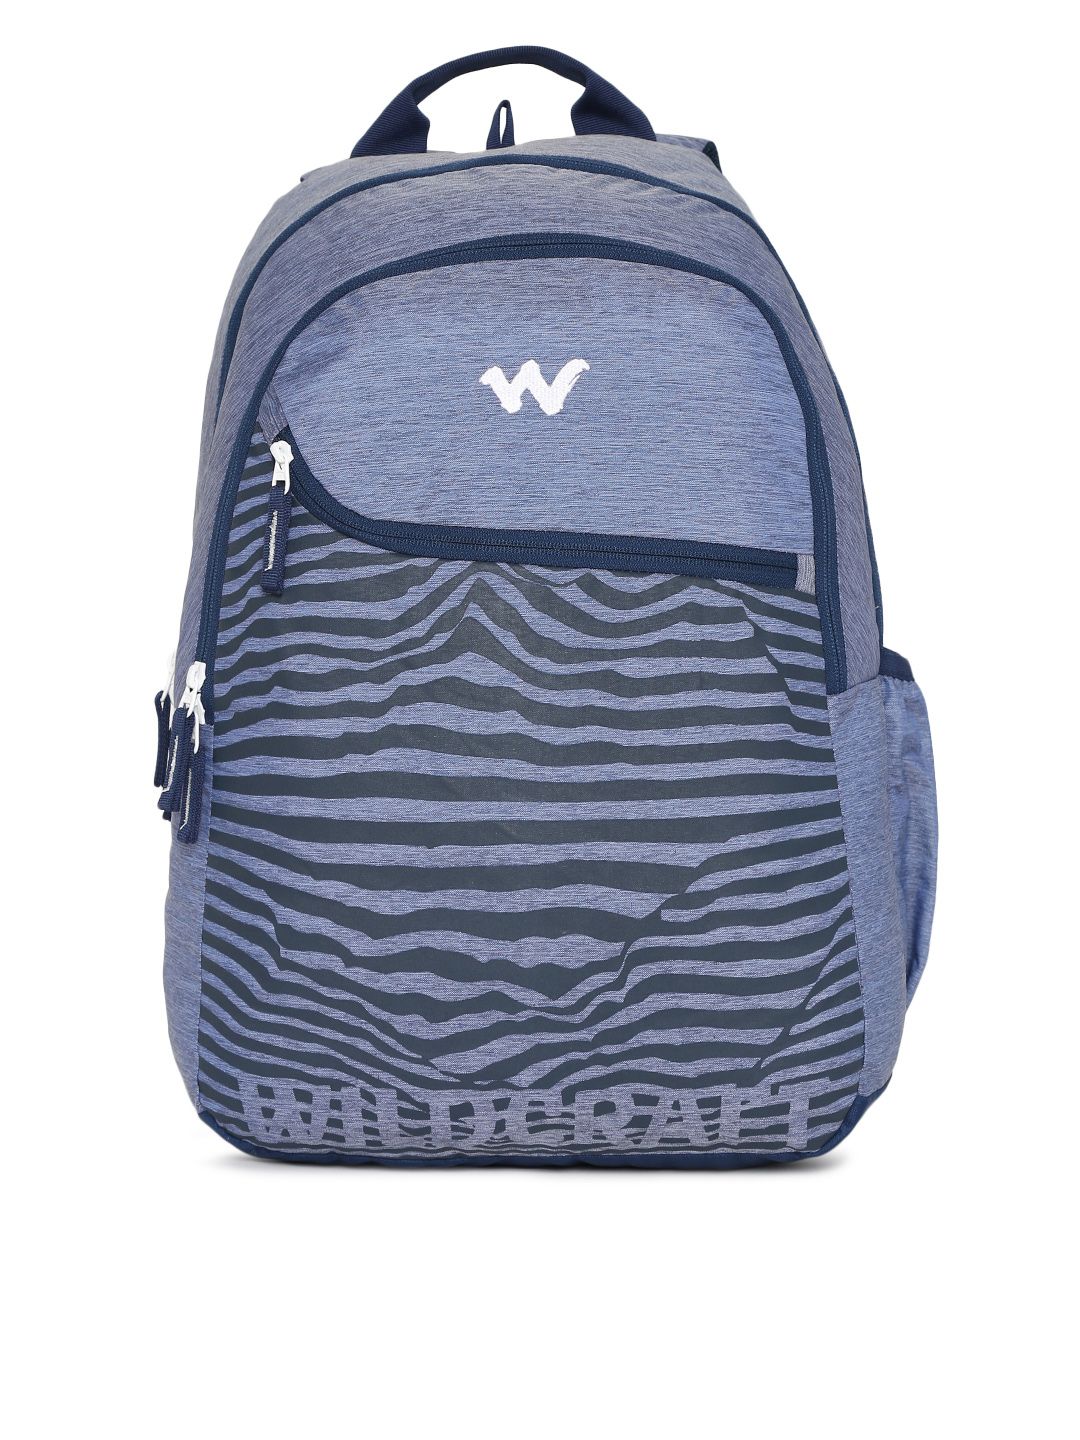 Wildcraft 3 Wild Unisex Blue Graphic Backpack Price in India